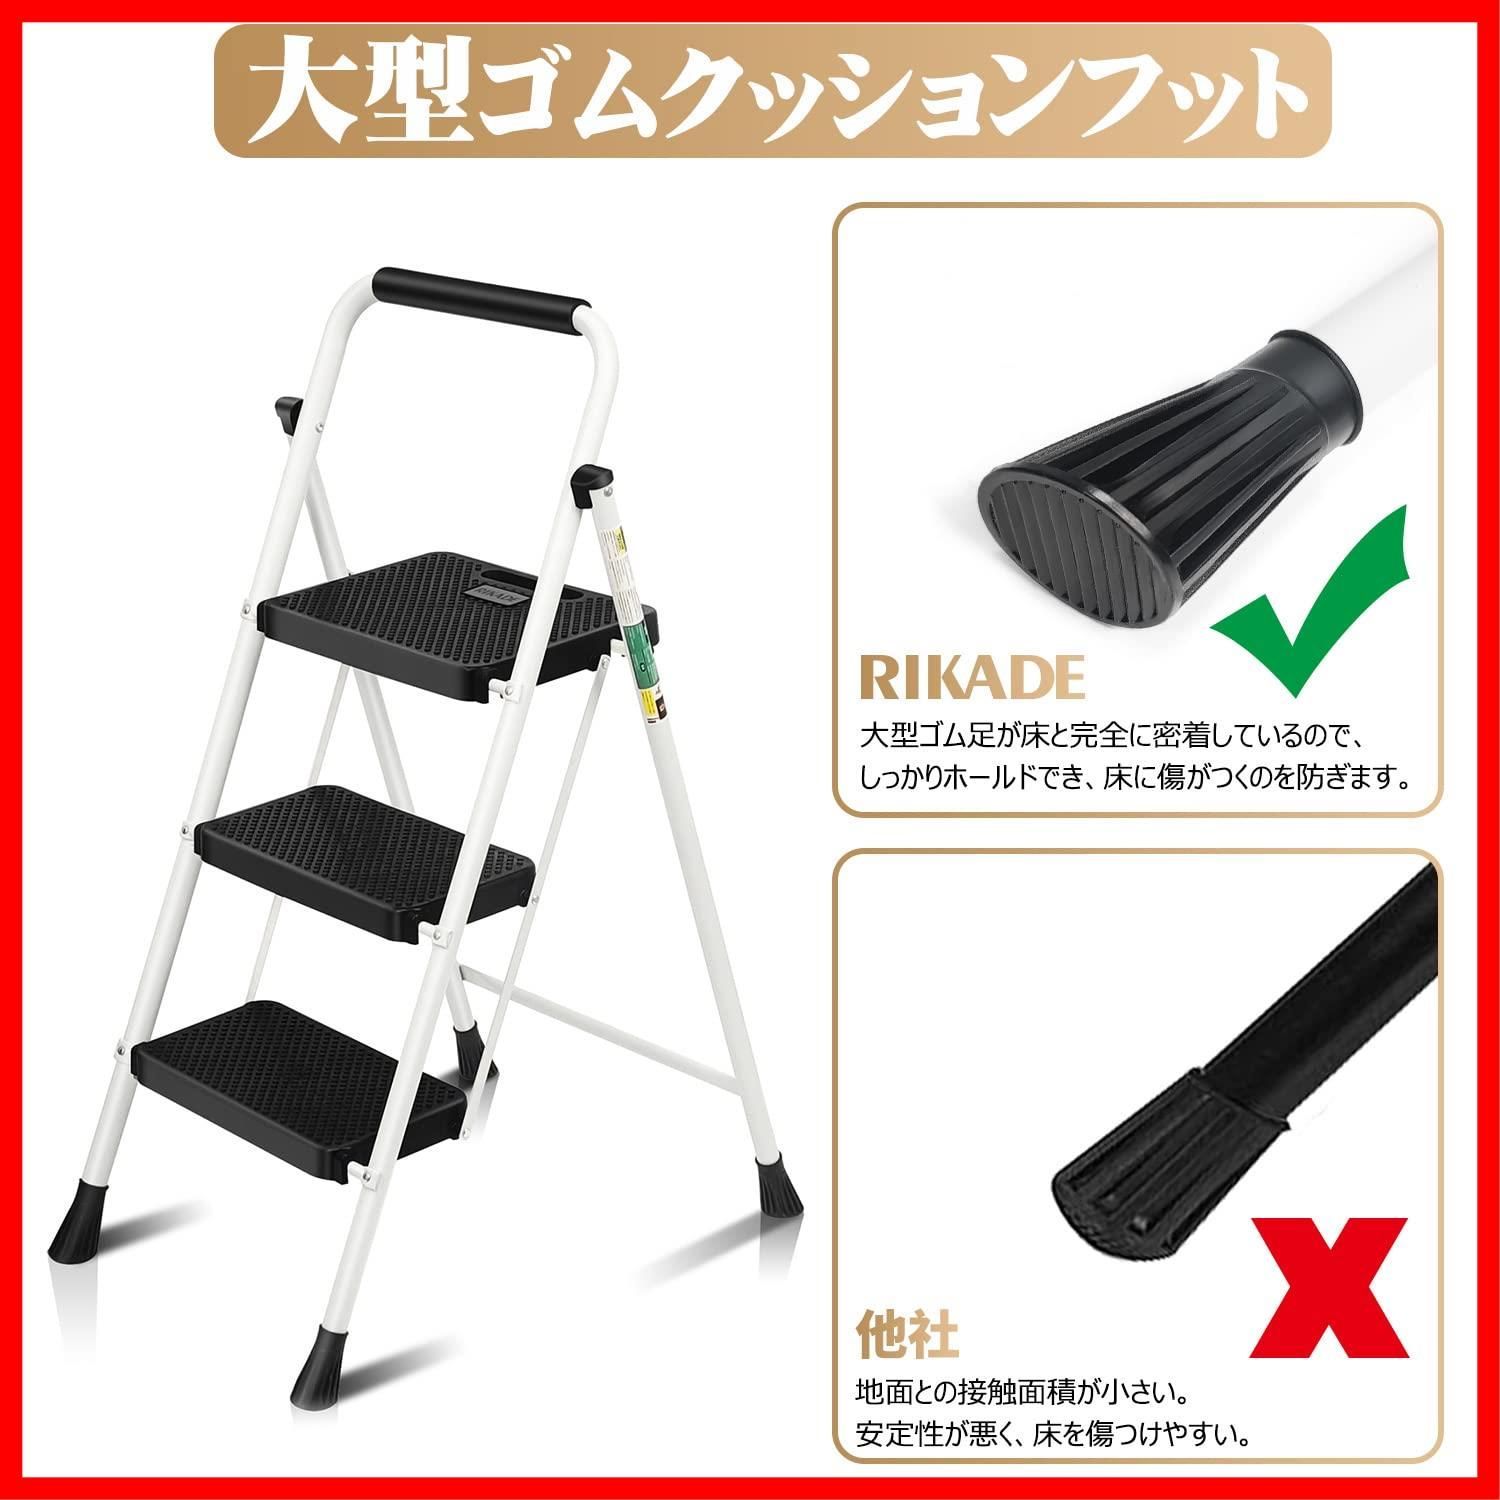 RIKADE 脚立 はしご 鉄素材 持ち運び便利 持ち手付き 軽量 折りたたみ ...